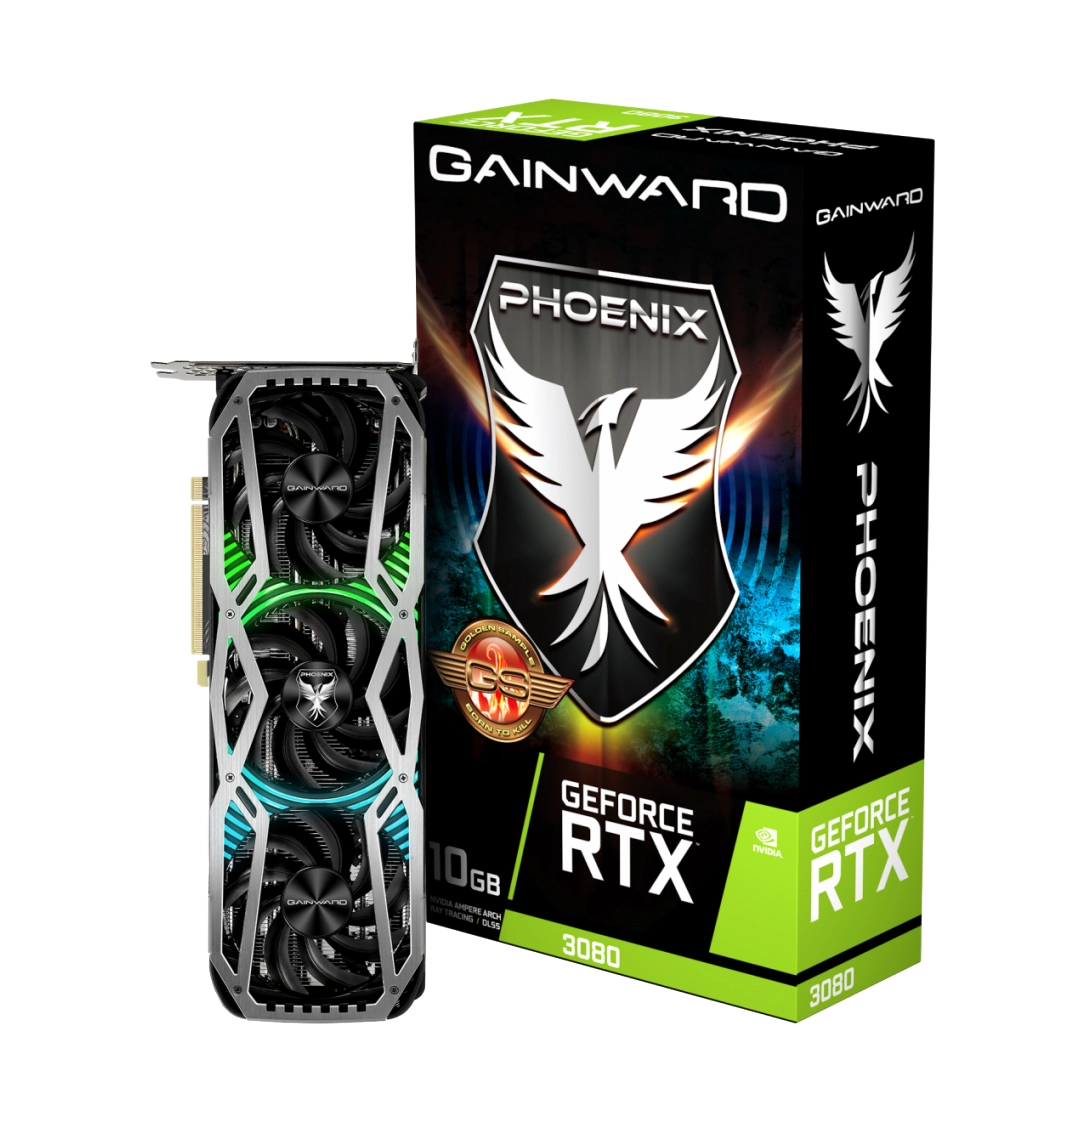 Gainward GeForce RTX 3080 Phoenix GS Package